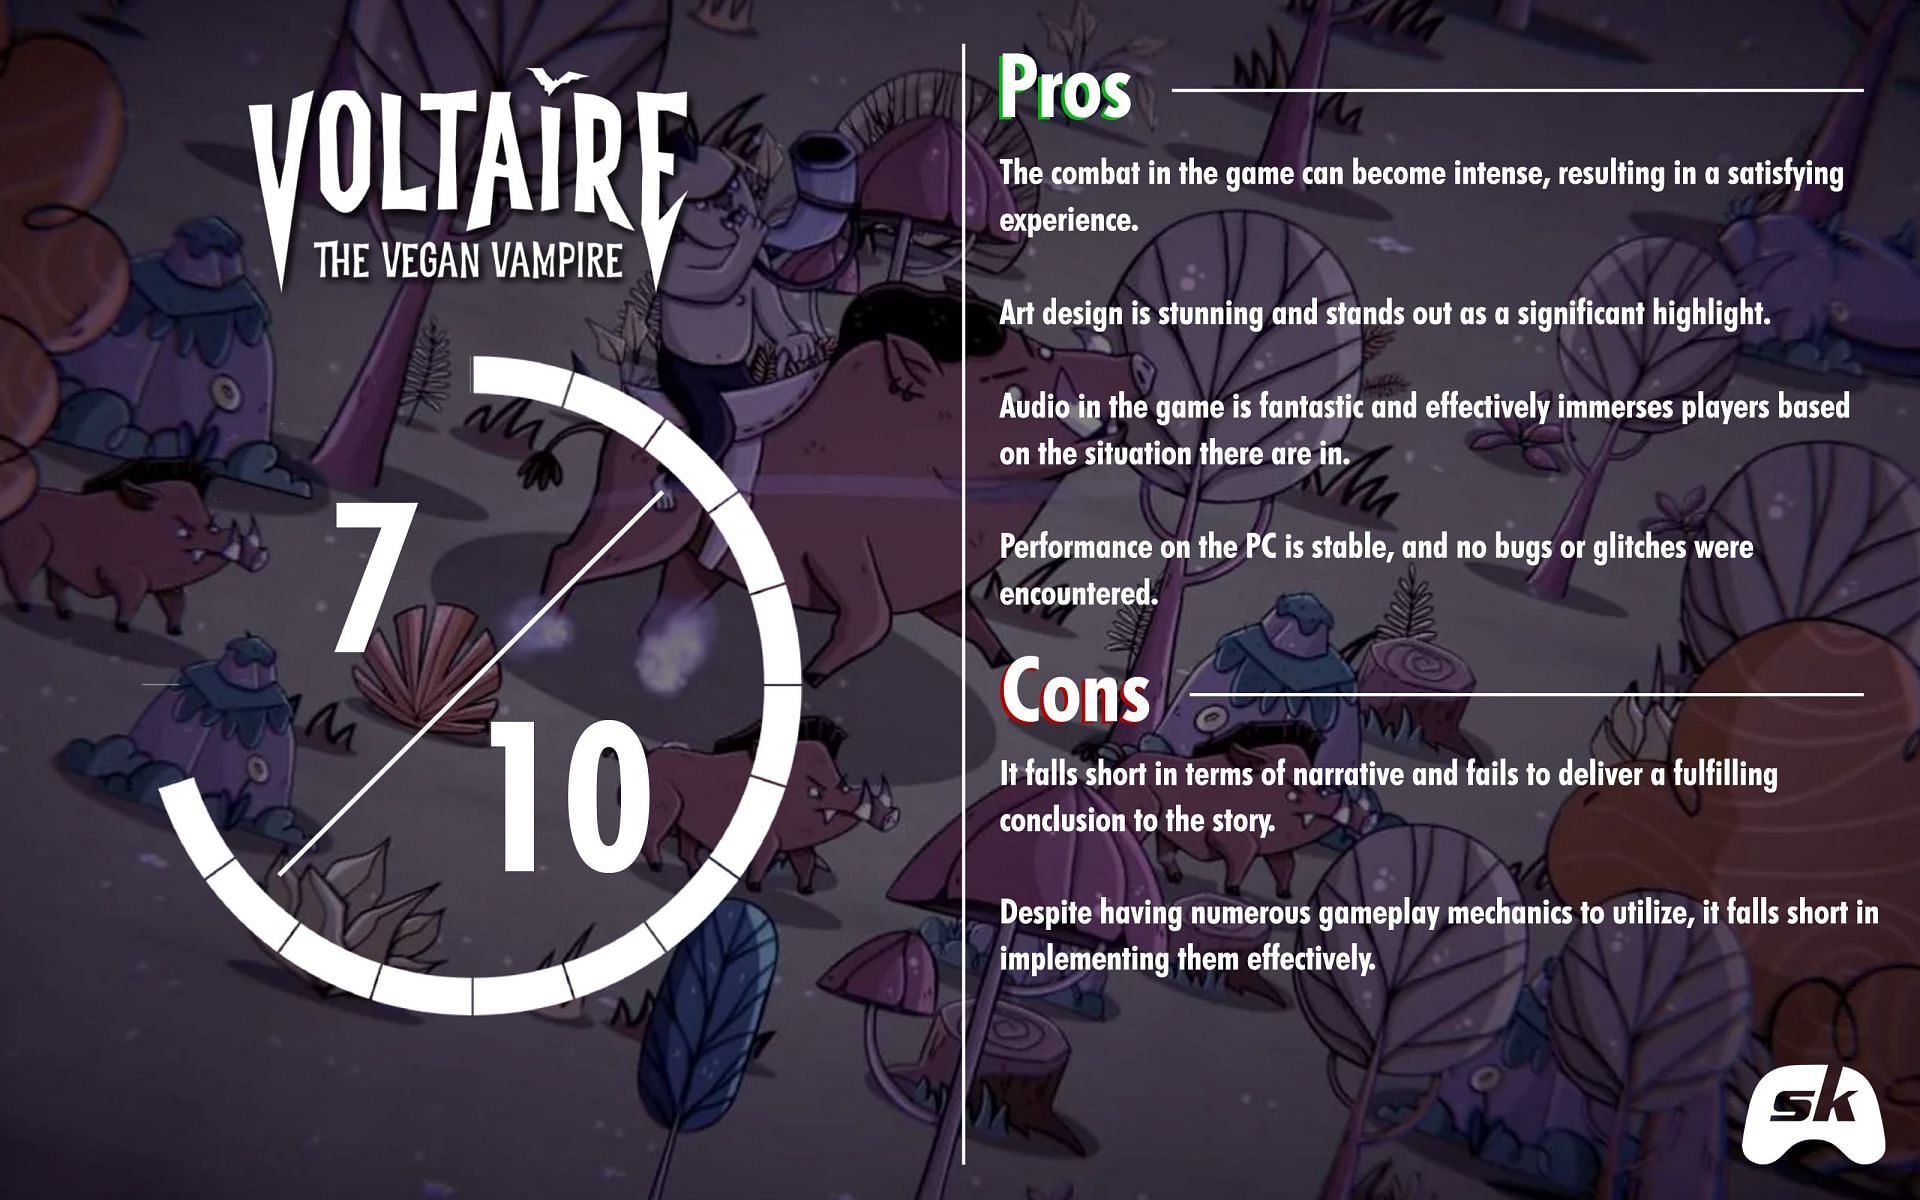 Voltaire - The Vegan Vampire scorecard (Image via Sportskeeda)